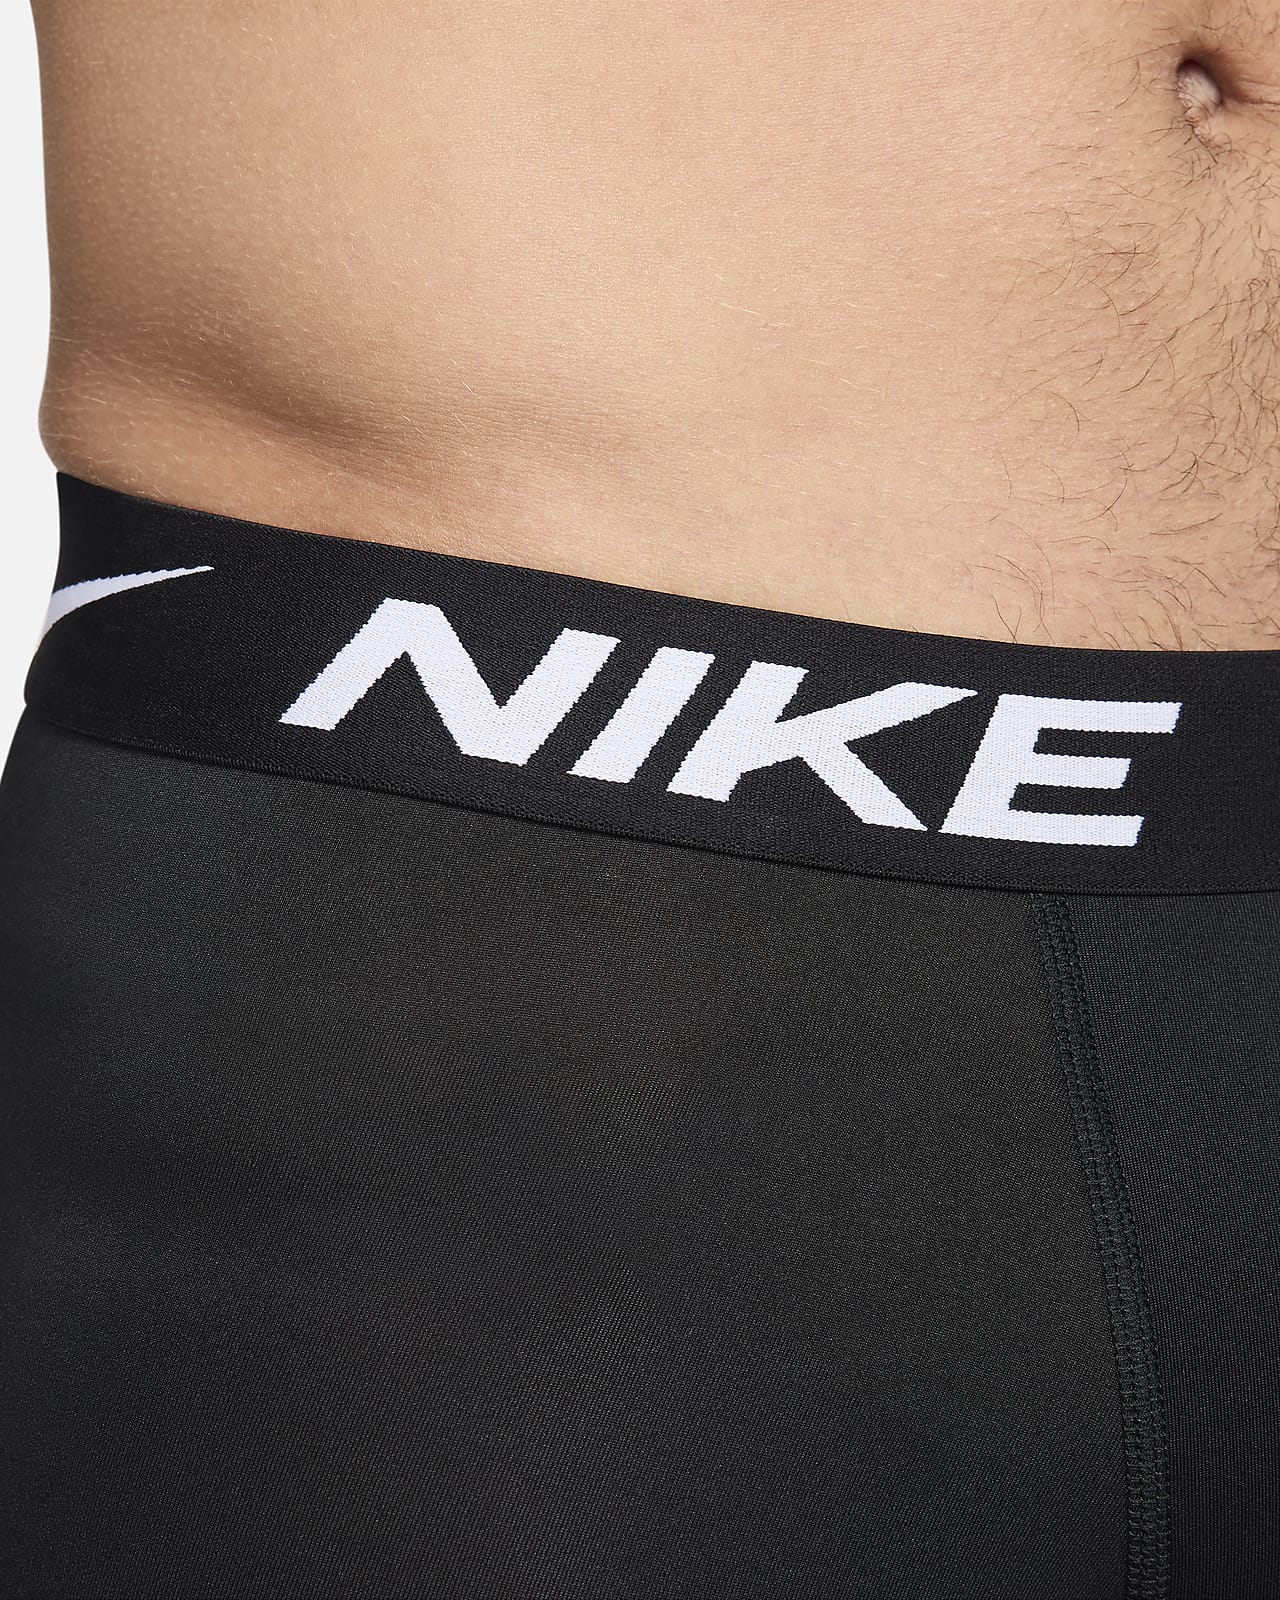 Nike Dri-FIT Essential Micro Men's Trunks (3-Pack).